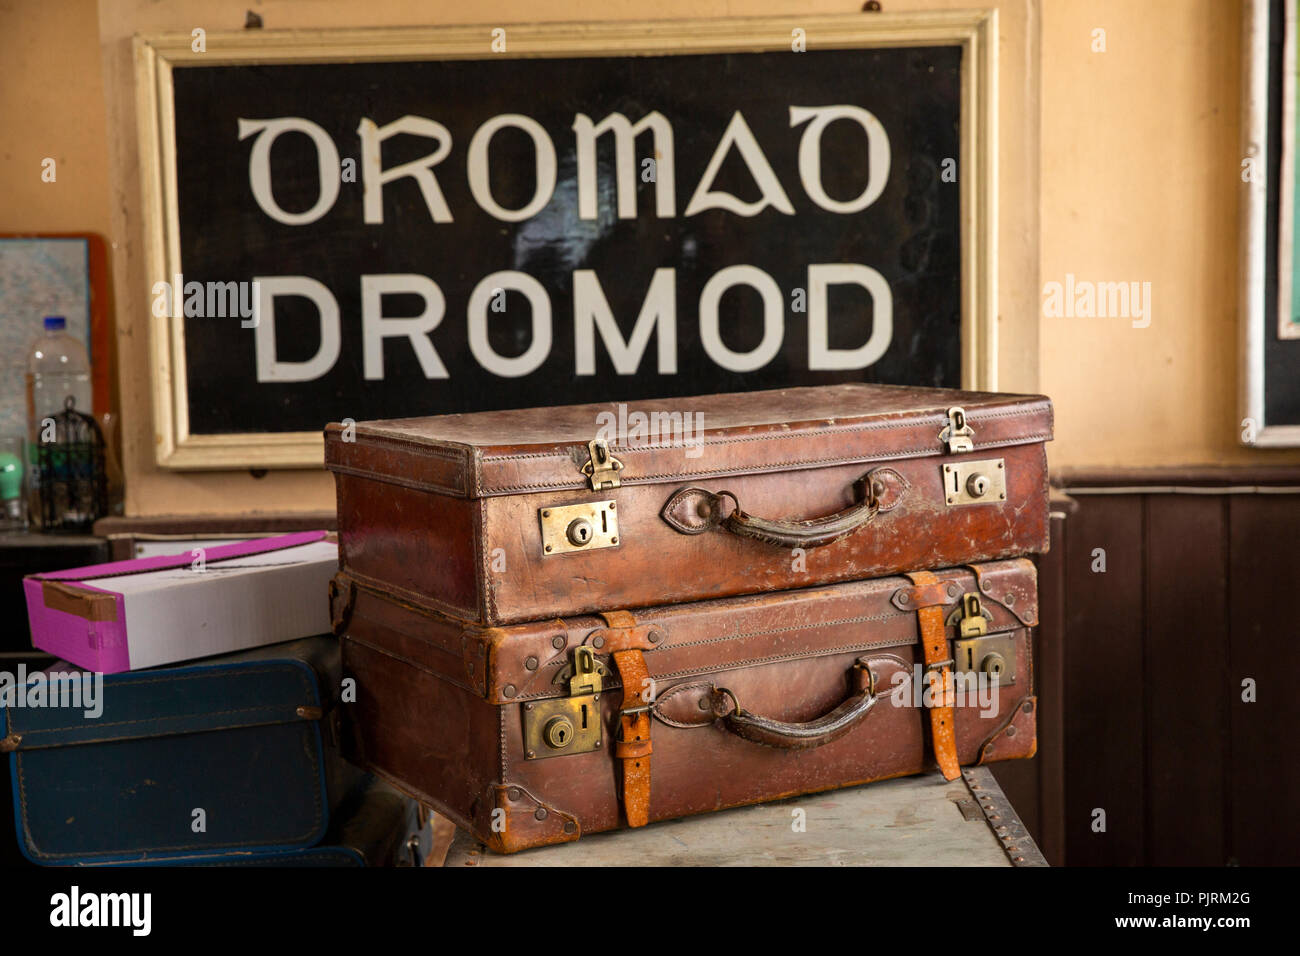 Ireland, Co Leitrim, Dromod, Cavan and Leitrim railway museum old luggage in ticket office Stock Photo